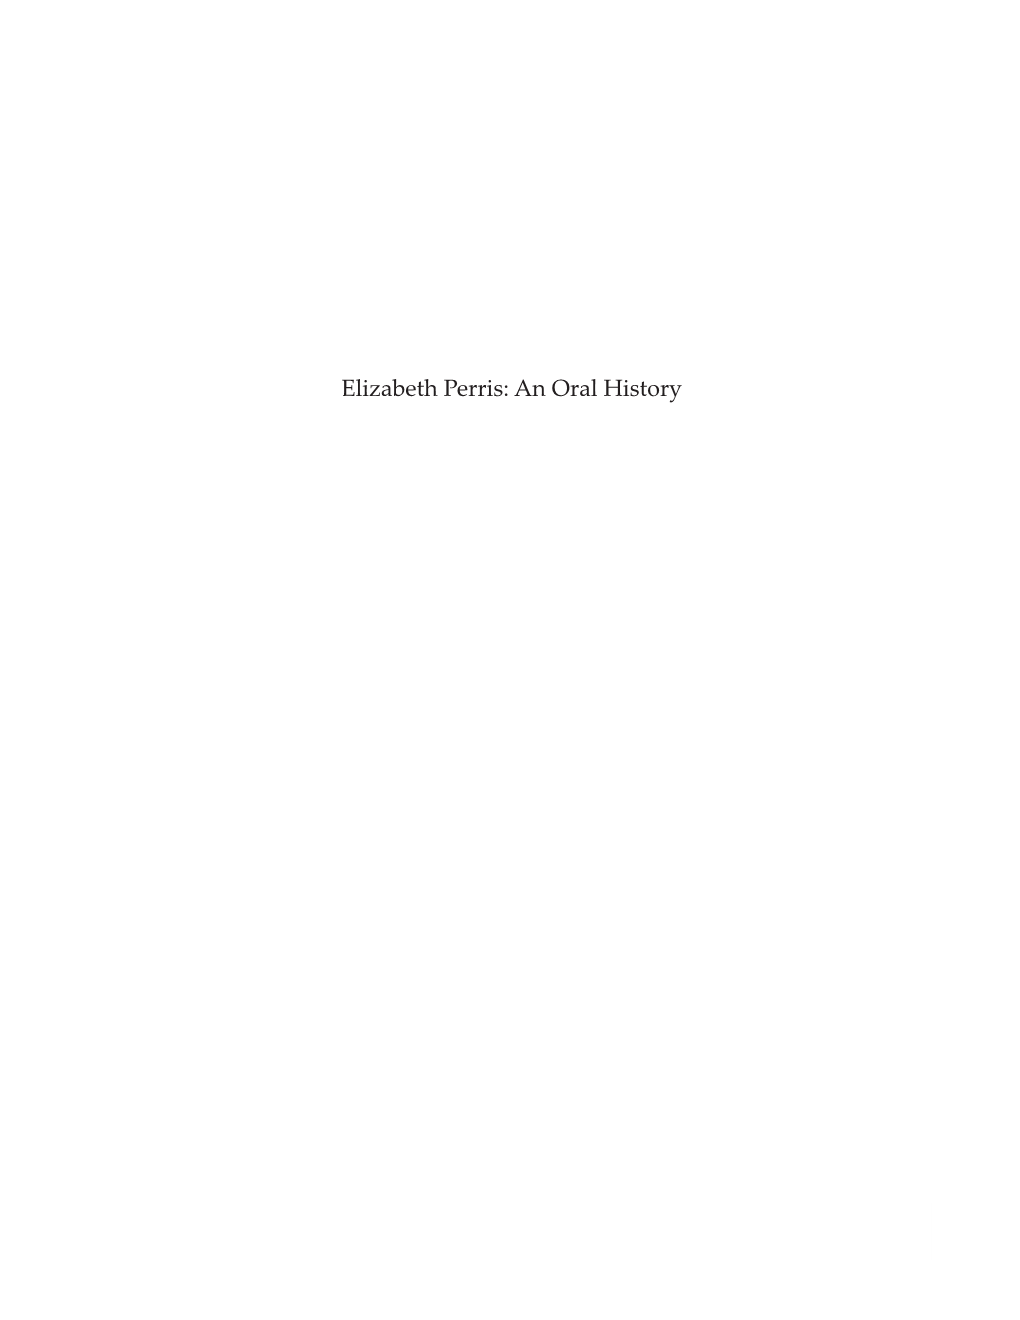 Elizabeth Perris: an Oral History